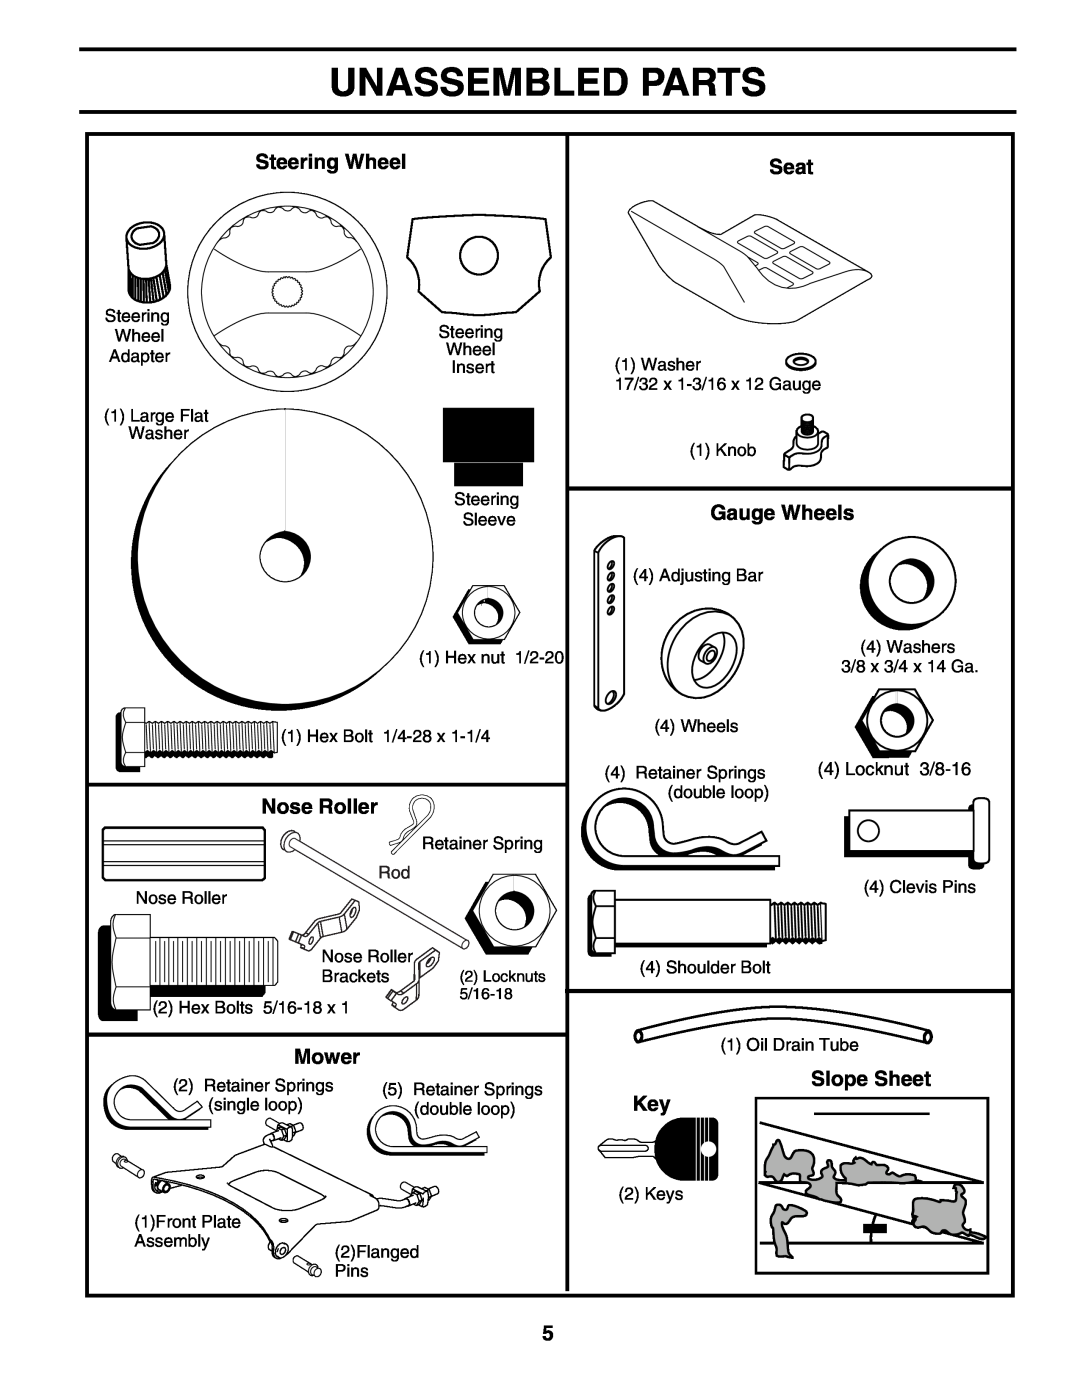 Poulan 195854 manual Unassembled Parts, Steering Wheel, Seat, Gauge Wheels, Mower, Slope Sheet, Locknut 3/8-16 